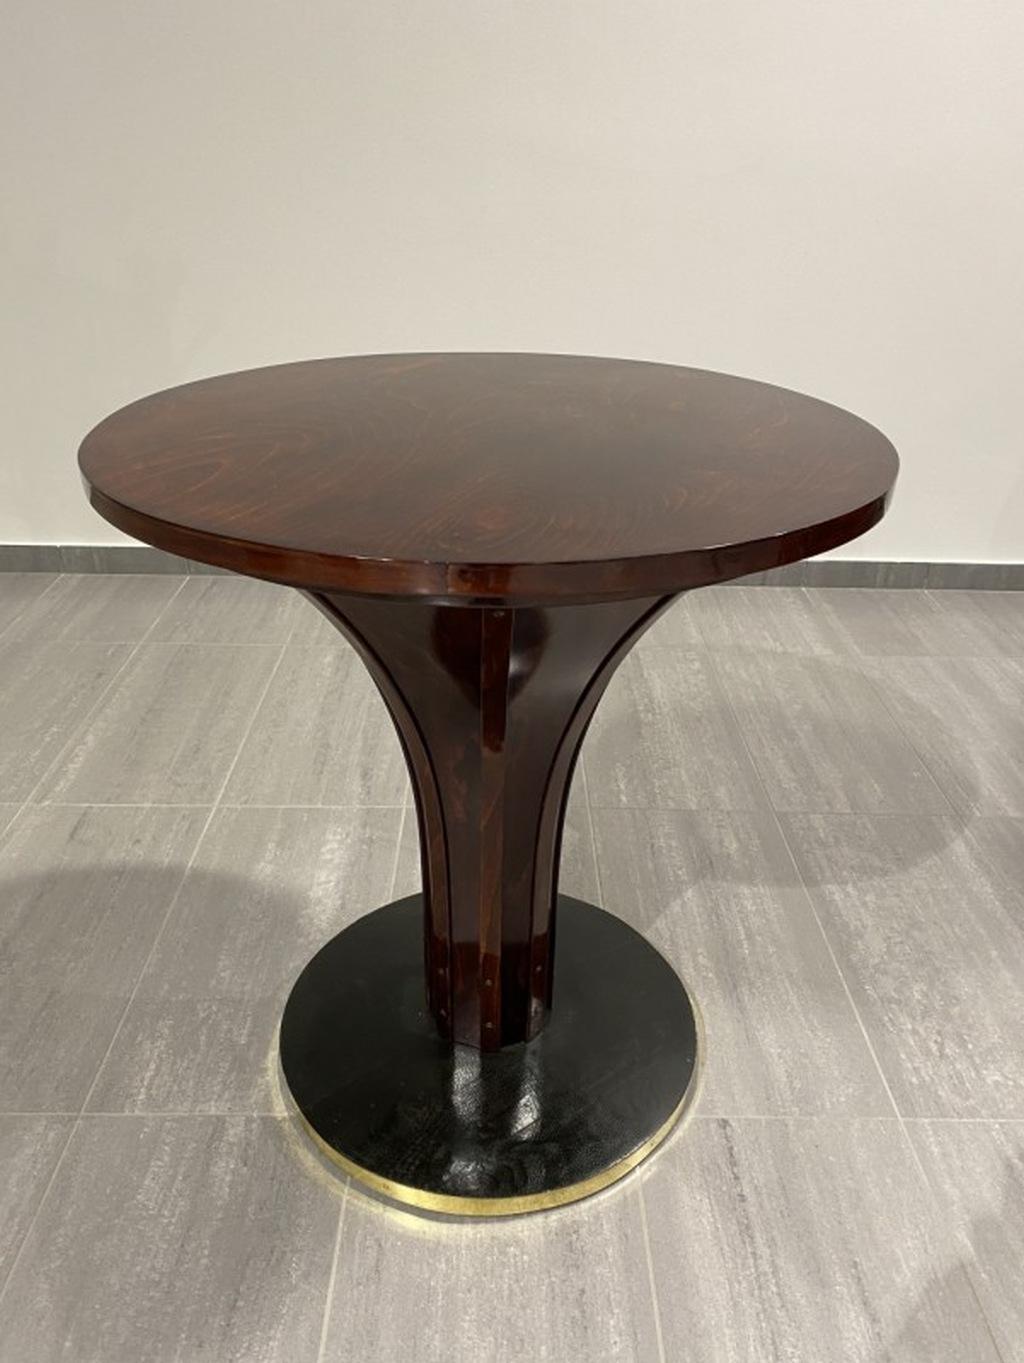 Vienna Secession Rare Otto Prutscher Vase Table No.8350 by Thonet For Sale